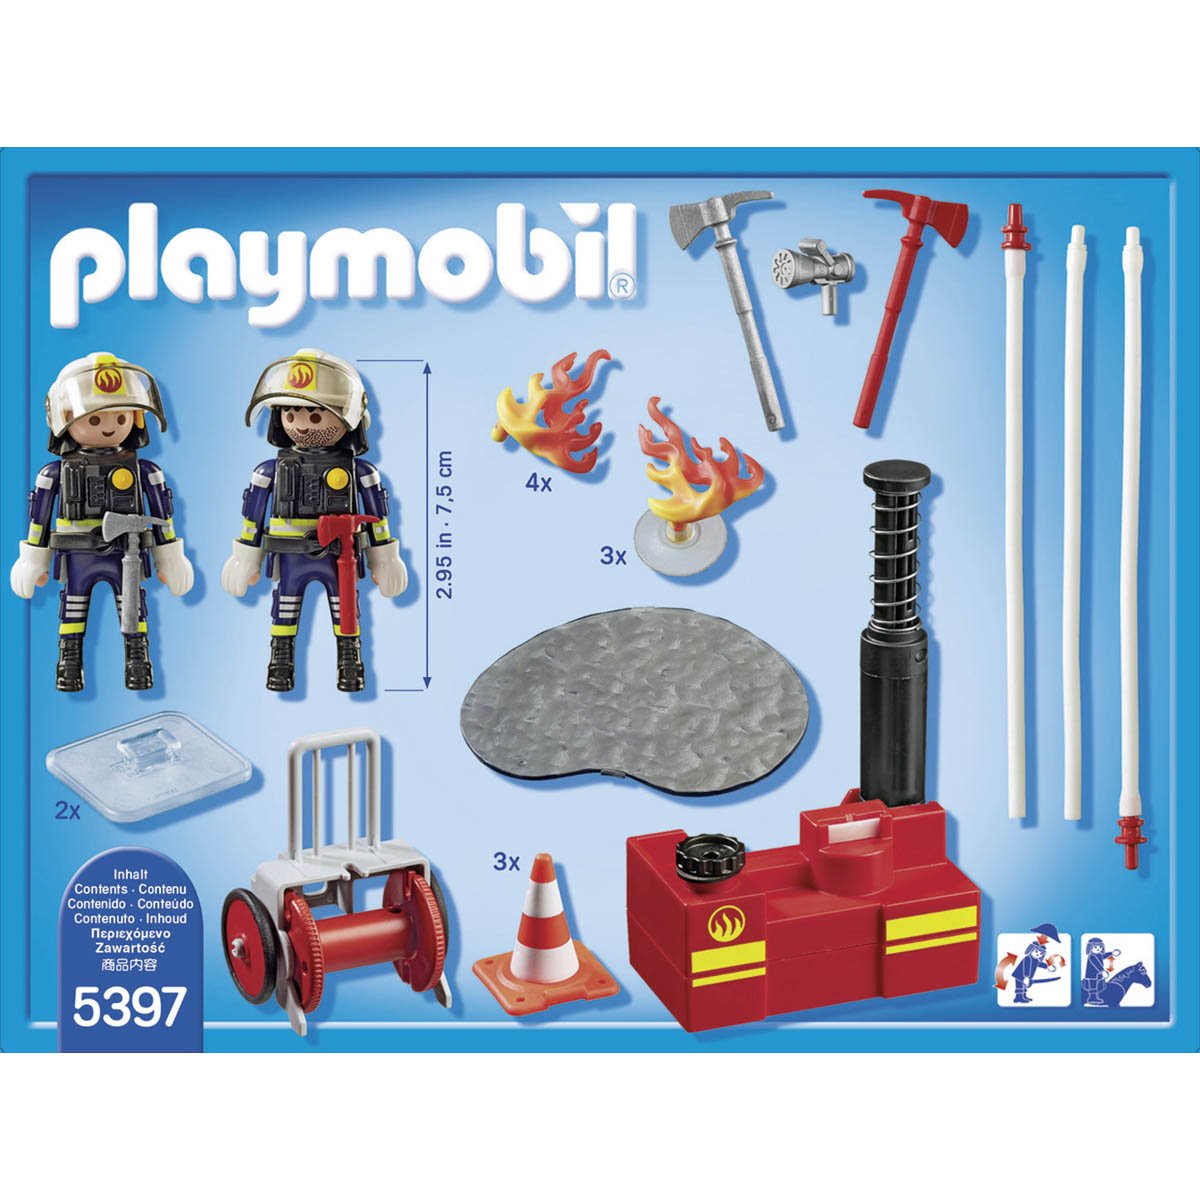 Equipo de Bomberos Playmobil